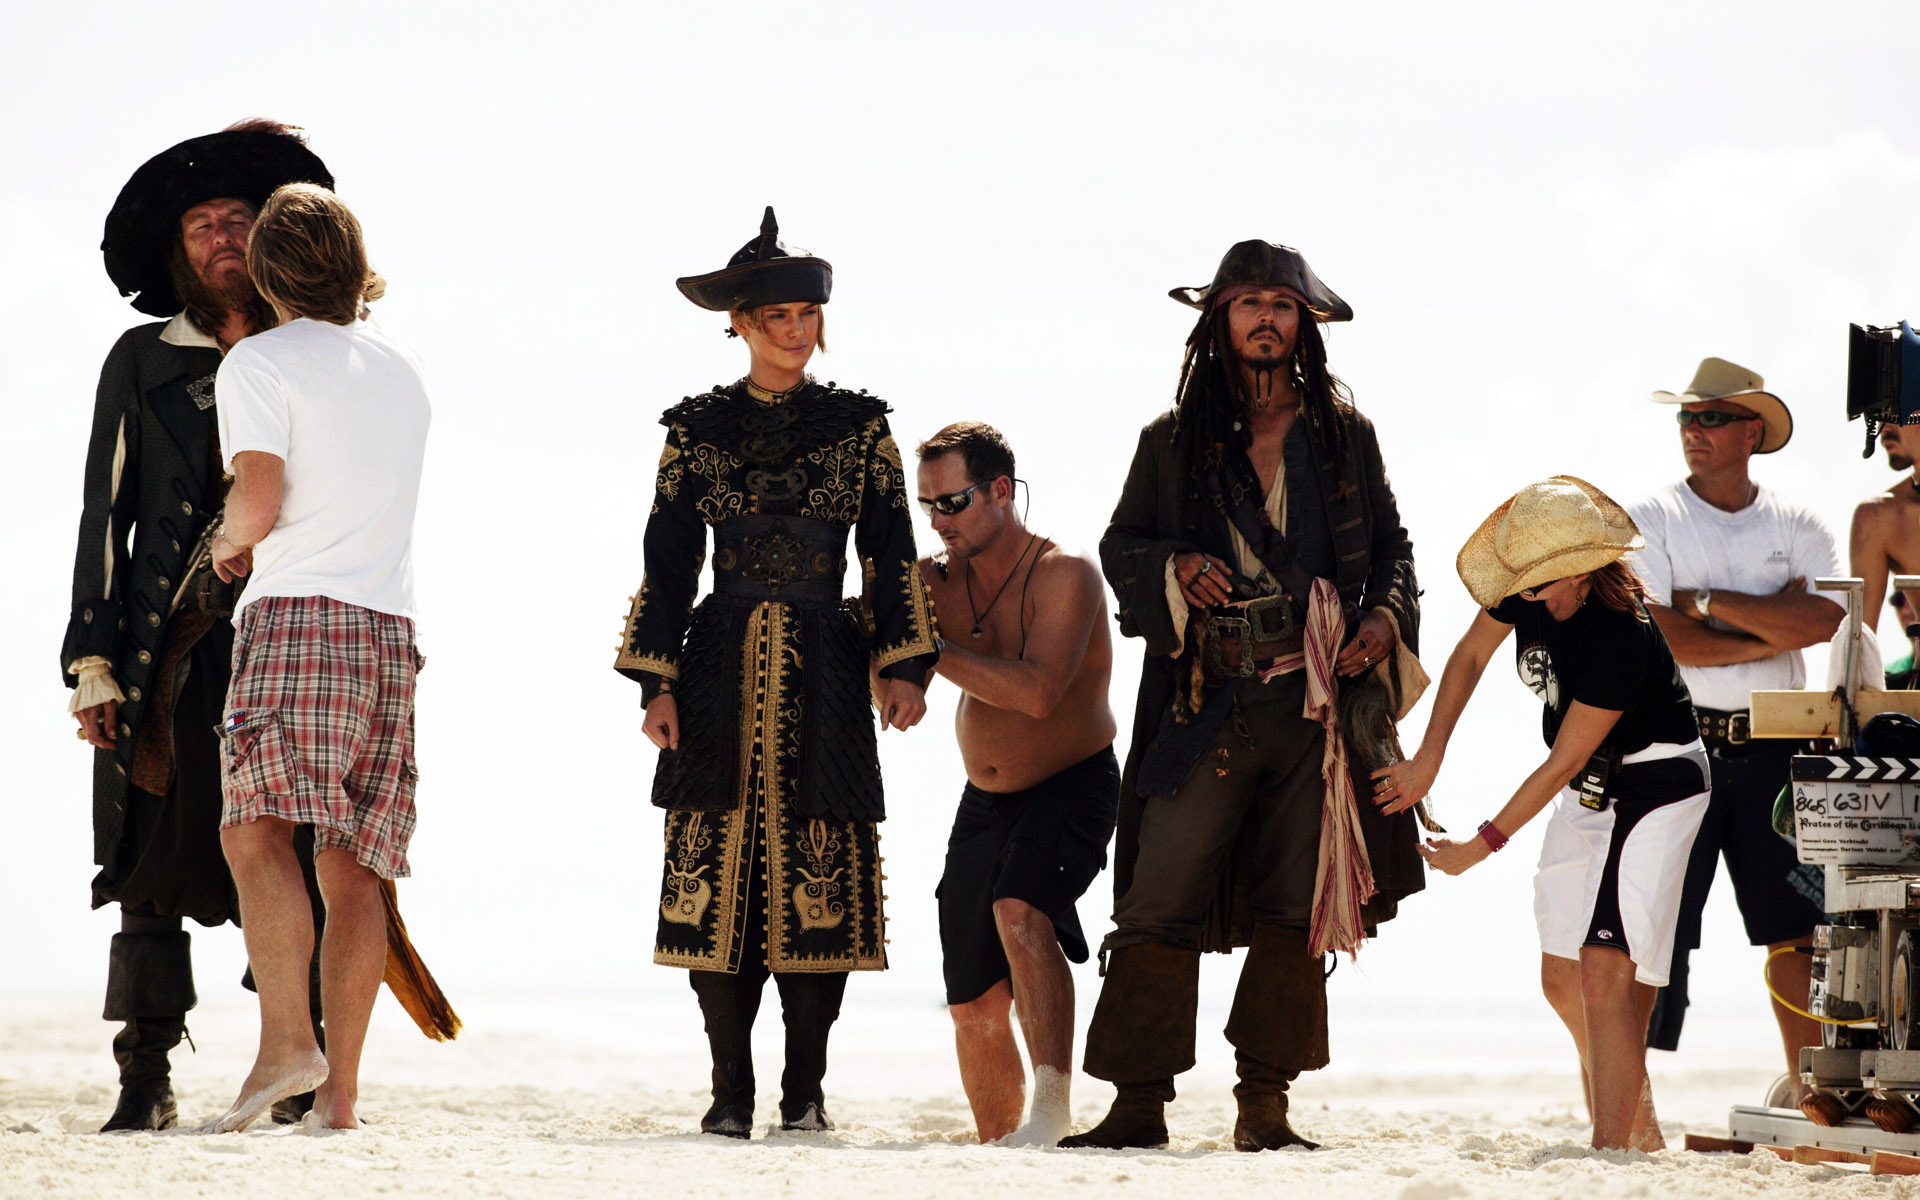 Keira Knightley as Elizabeth Swann, Geoffrey Rush as Hector Barbossa, and Johnny Depp as Jack Sparrow.